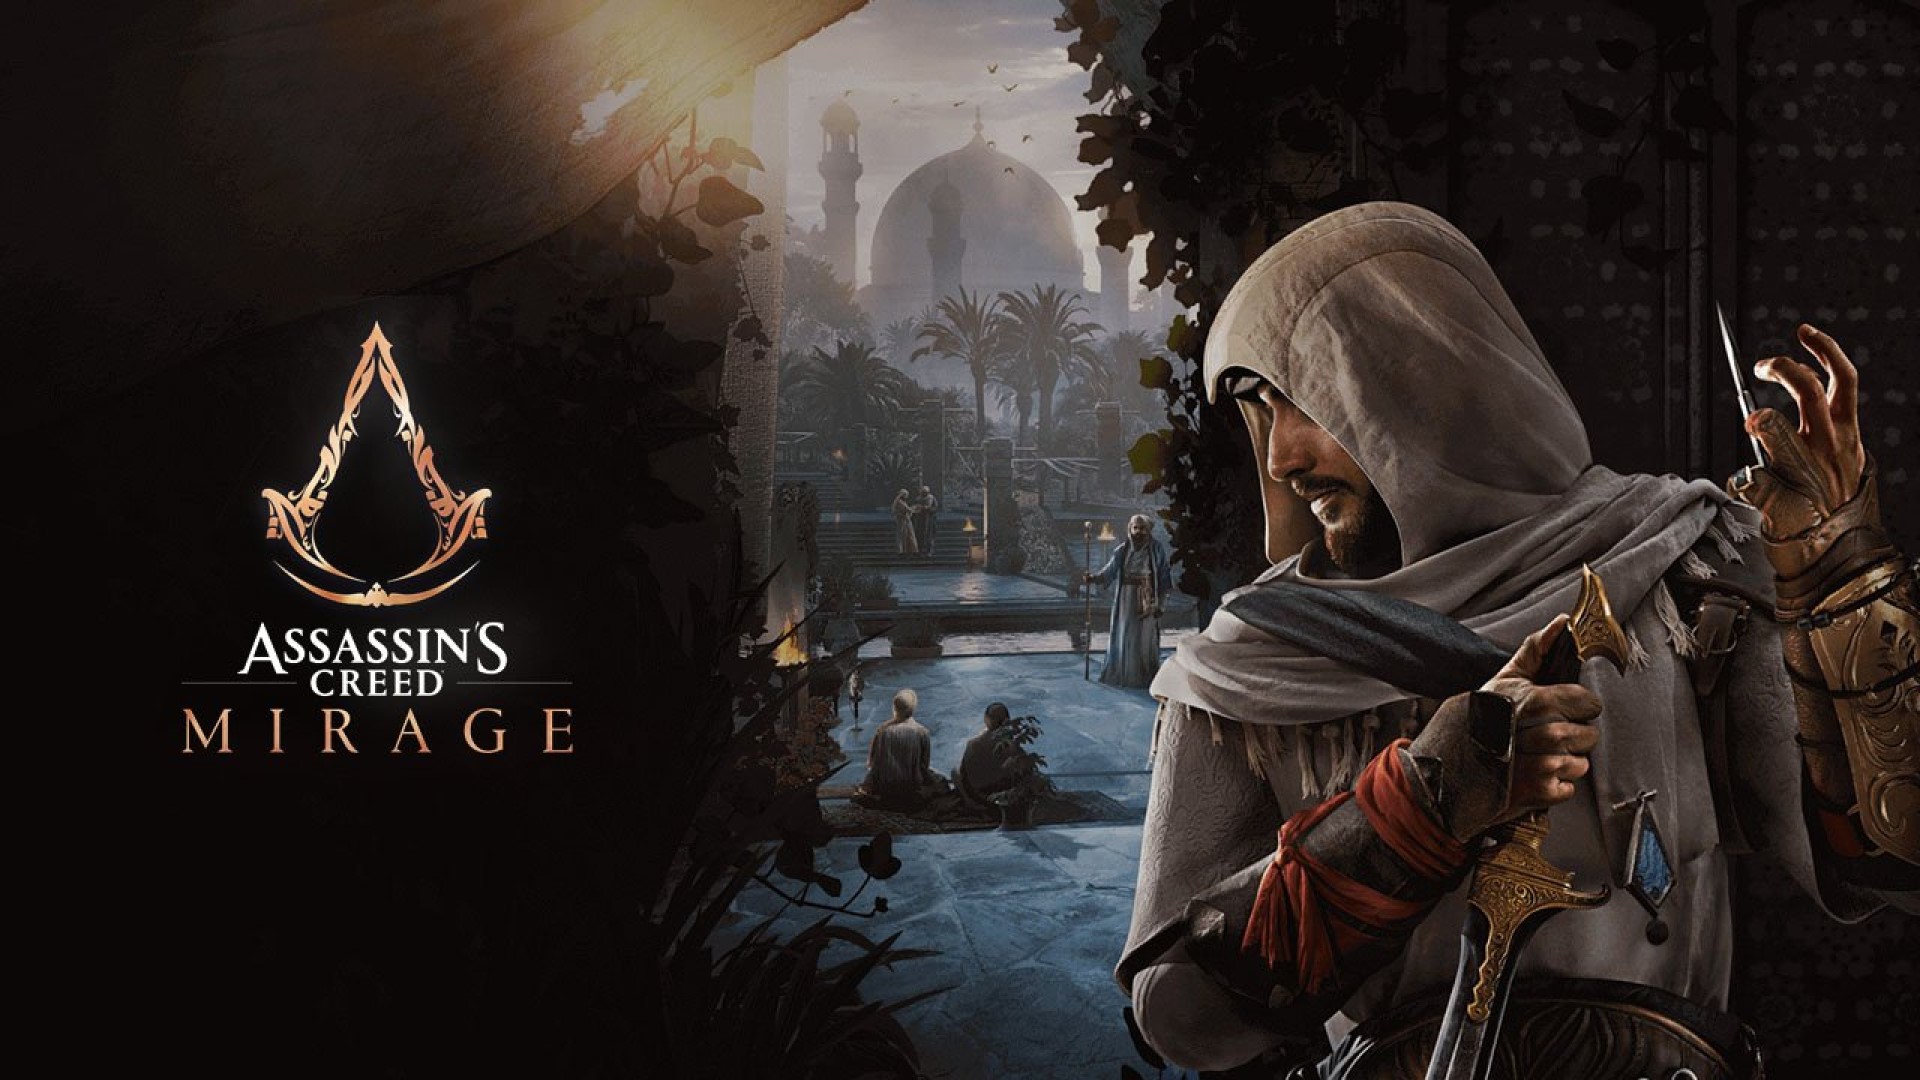 Assassin's Creed advertisement